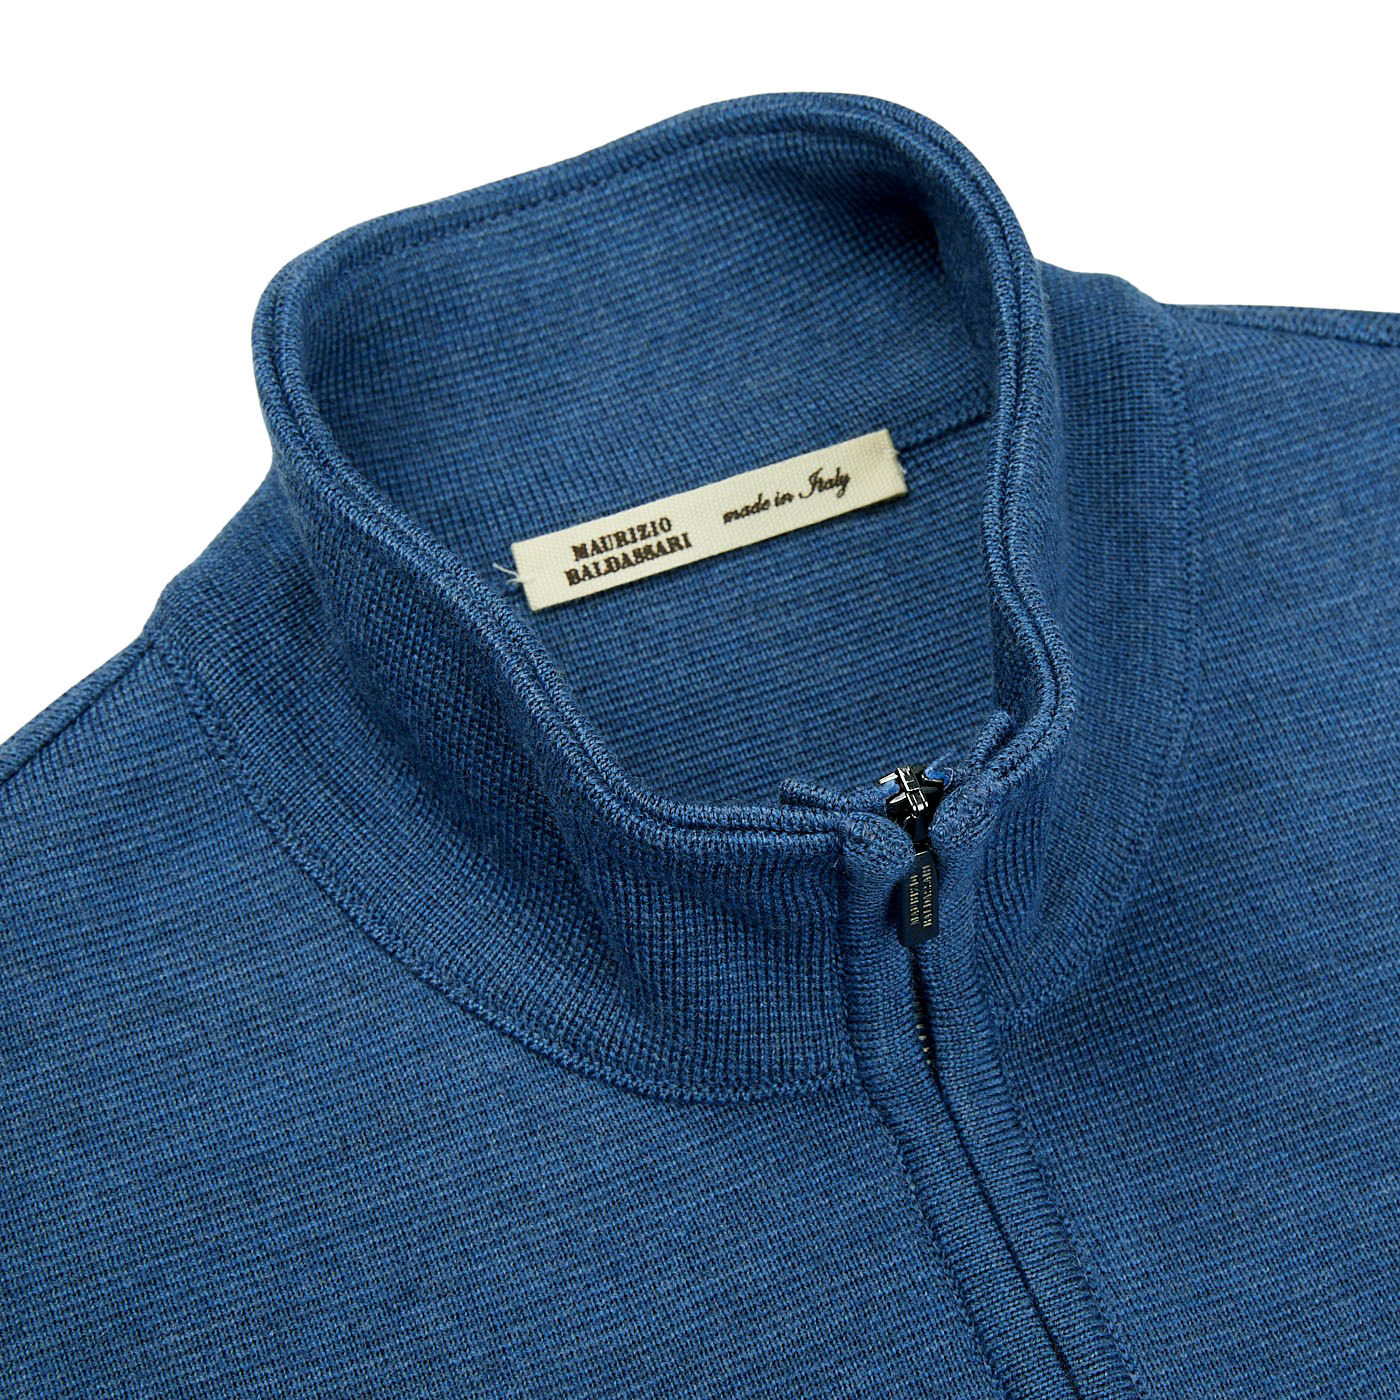 A close up of a Denim Blue Milano Stitch Wool Zip Gilet by Maurizio Baldassari.